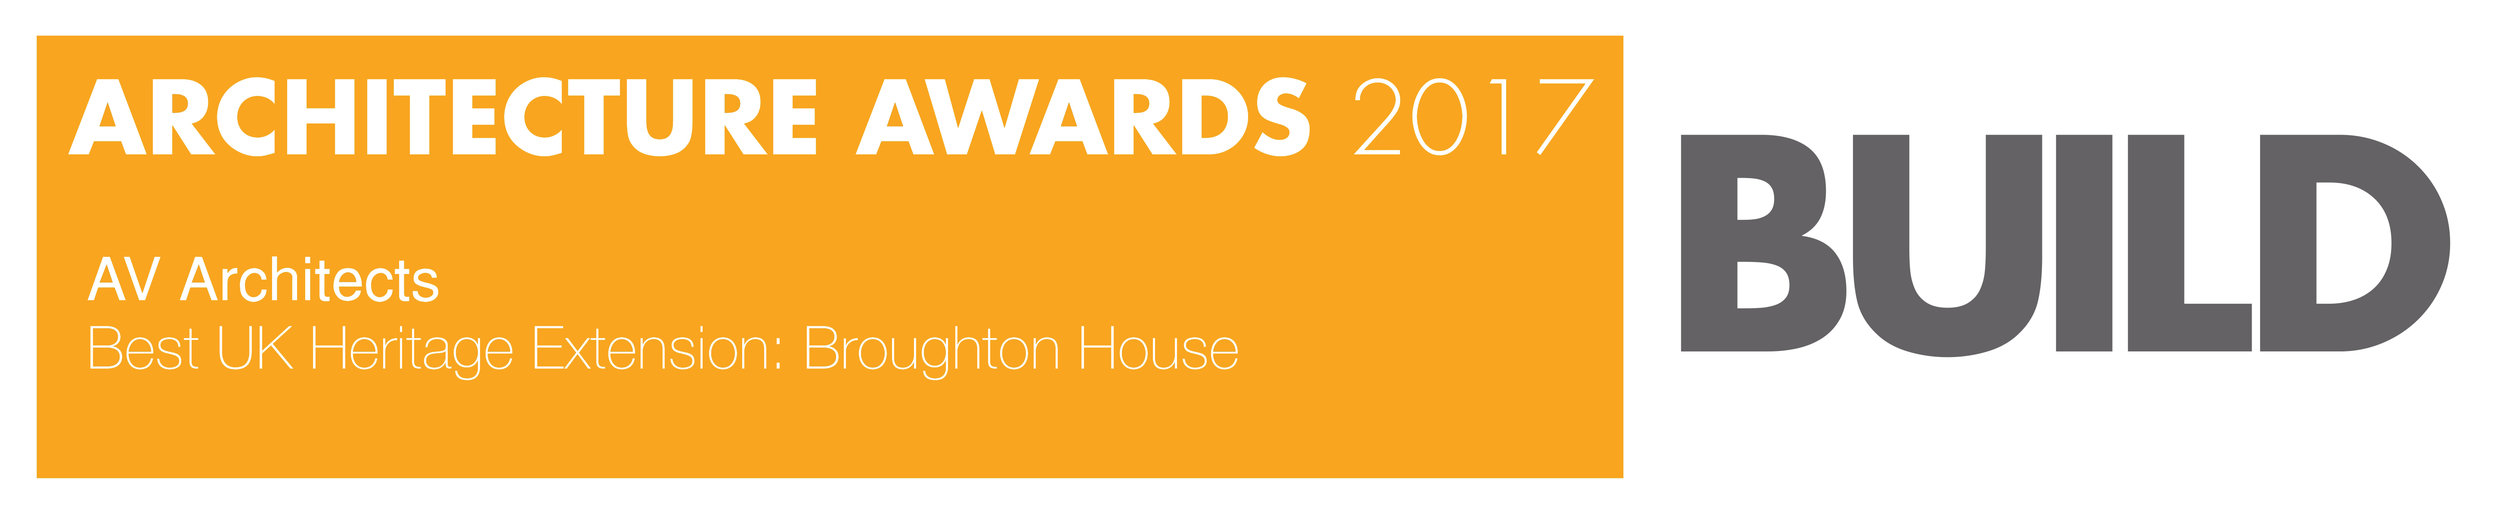 Oragne-Best UK Heritage Extension Broughton House-Architecture Winners Logo.jpg